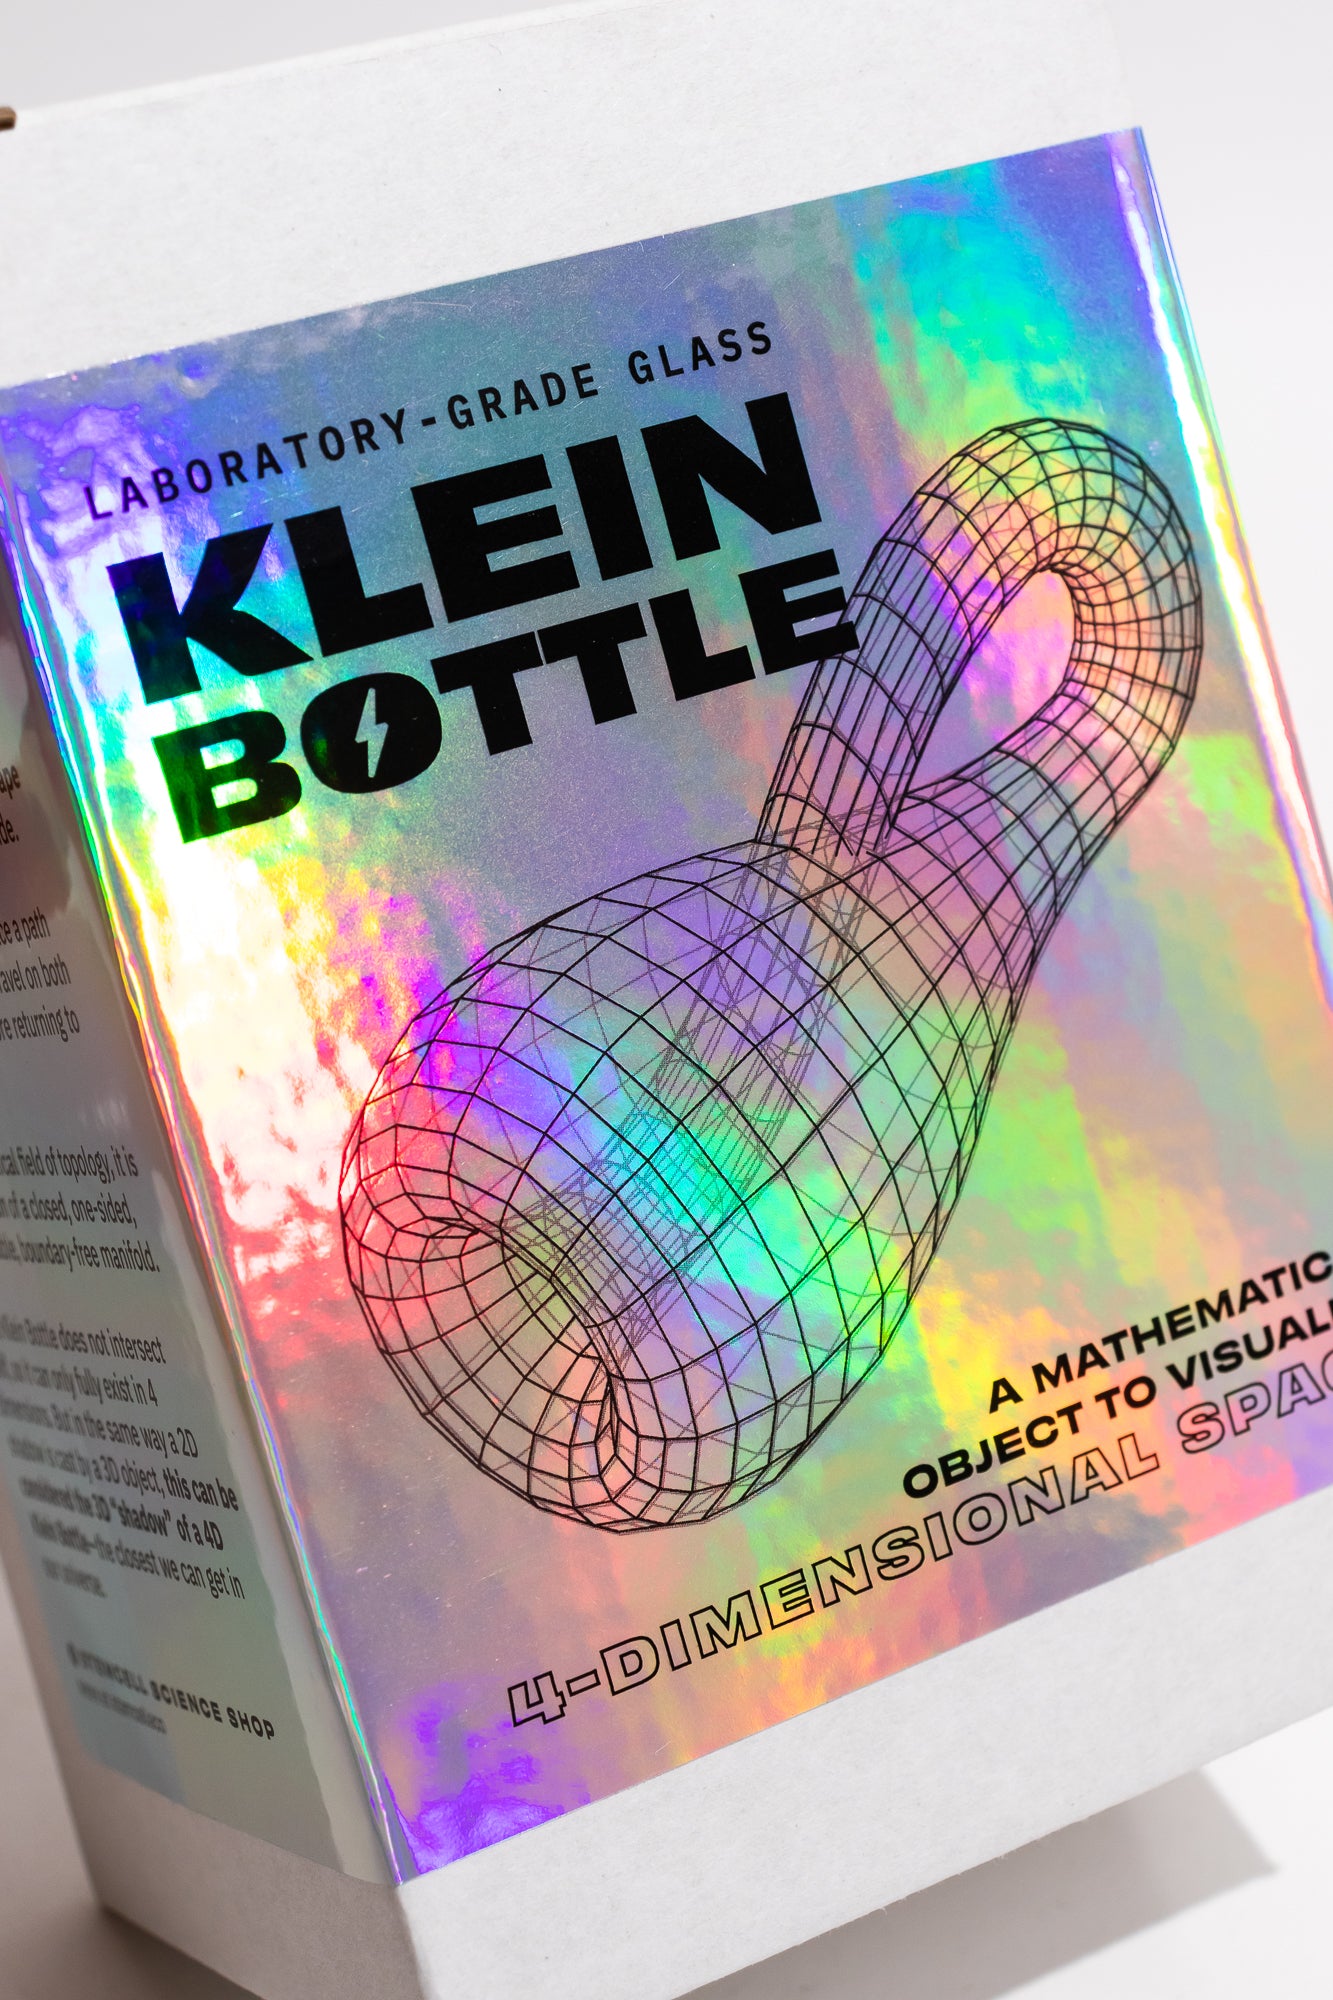 Klein Bottle - Stemcell Science Shop